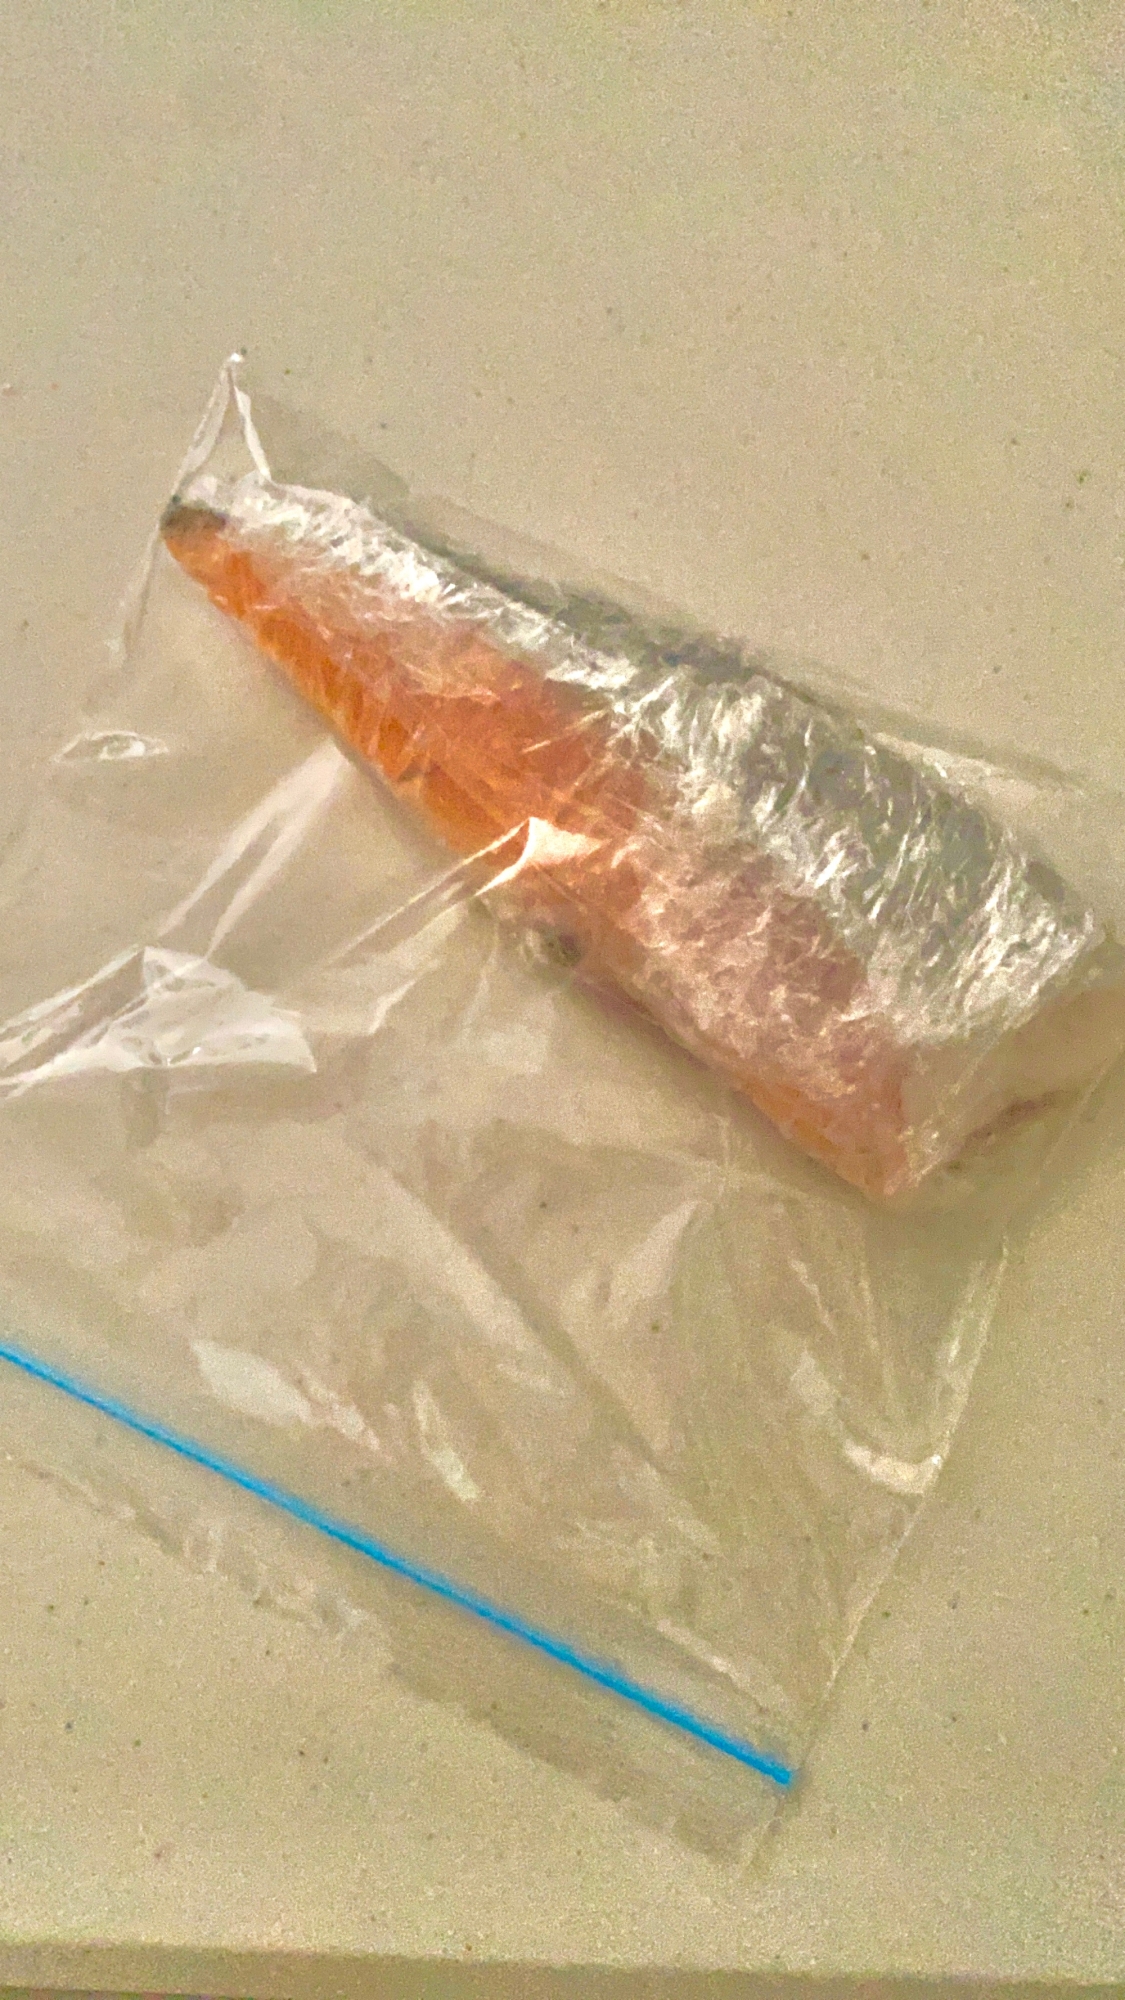 鮭の冷凍方法